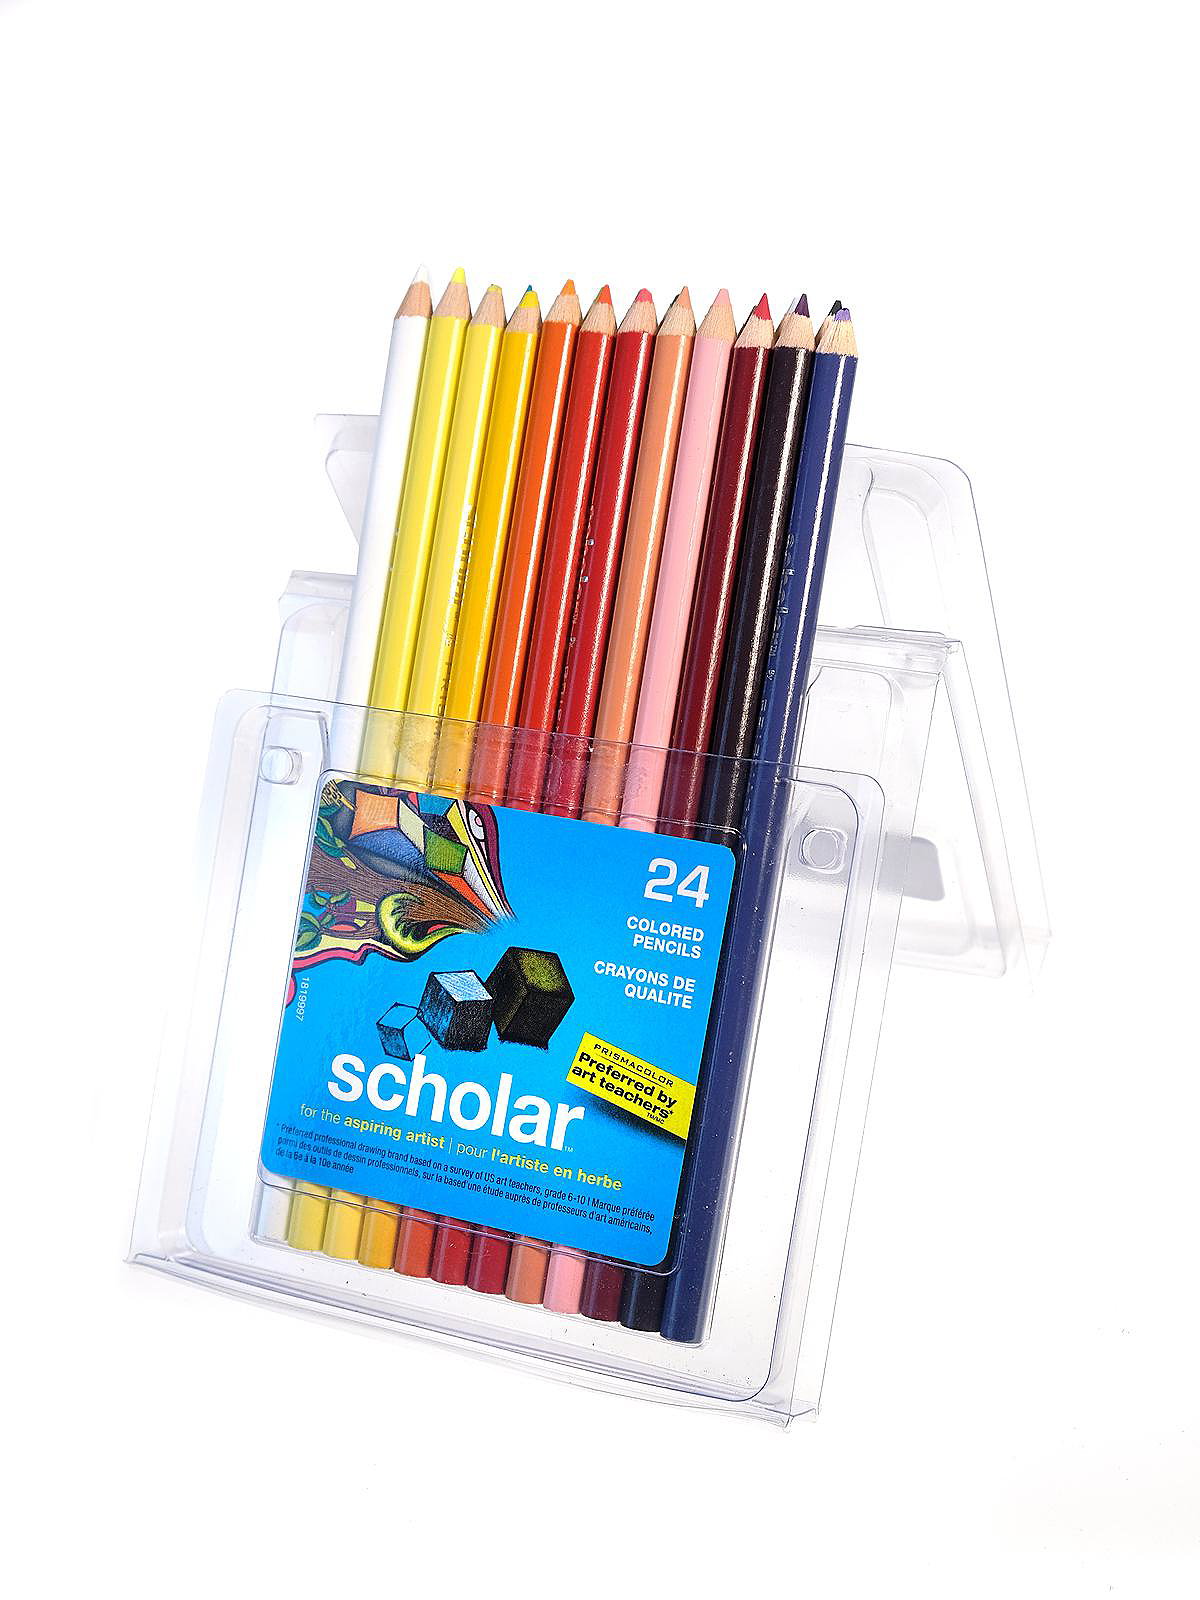 Prismacolor Colored Pencils, Set of 48 Pencils Prismacolor Scholar